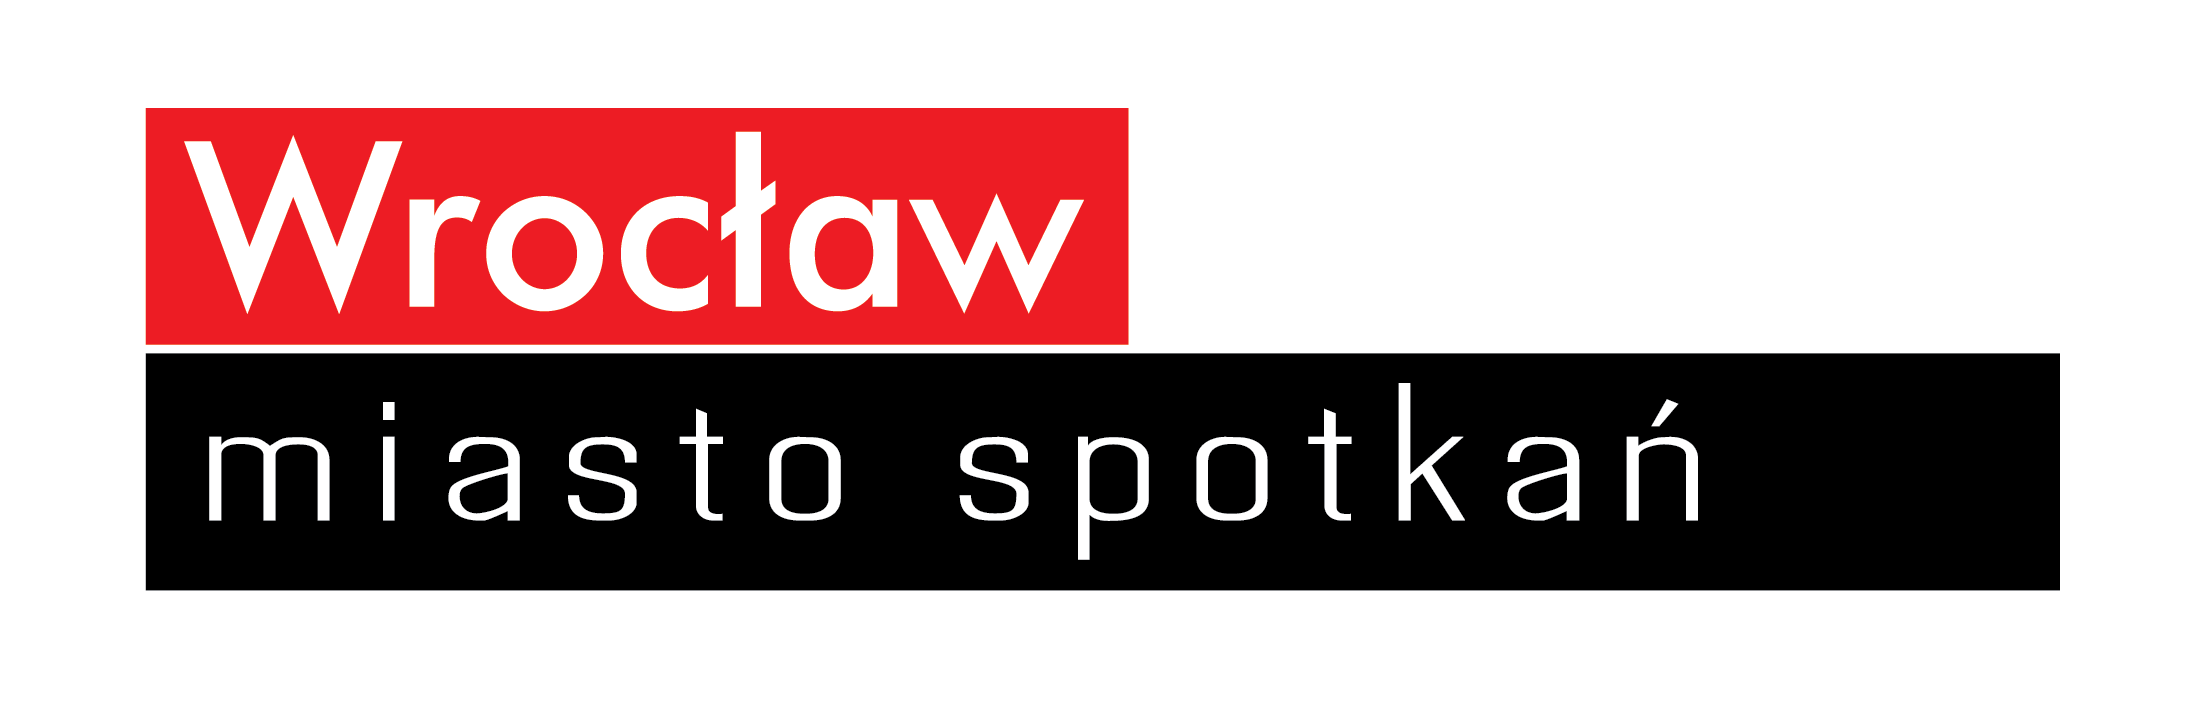 wroclaw-logo.png (2206×706)